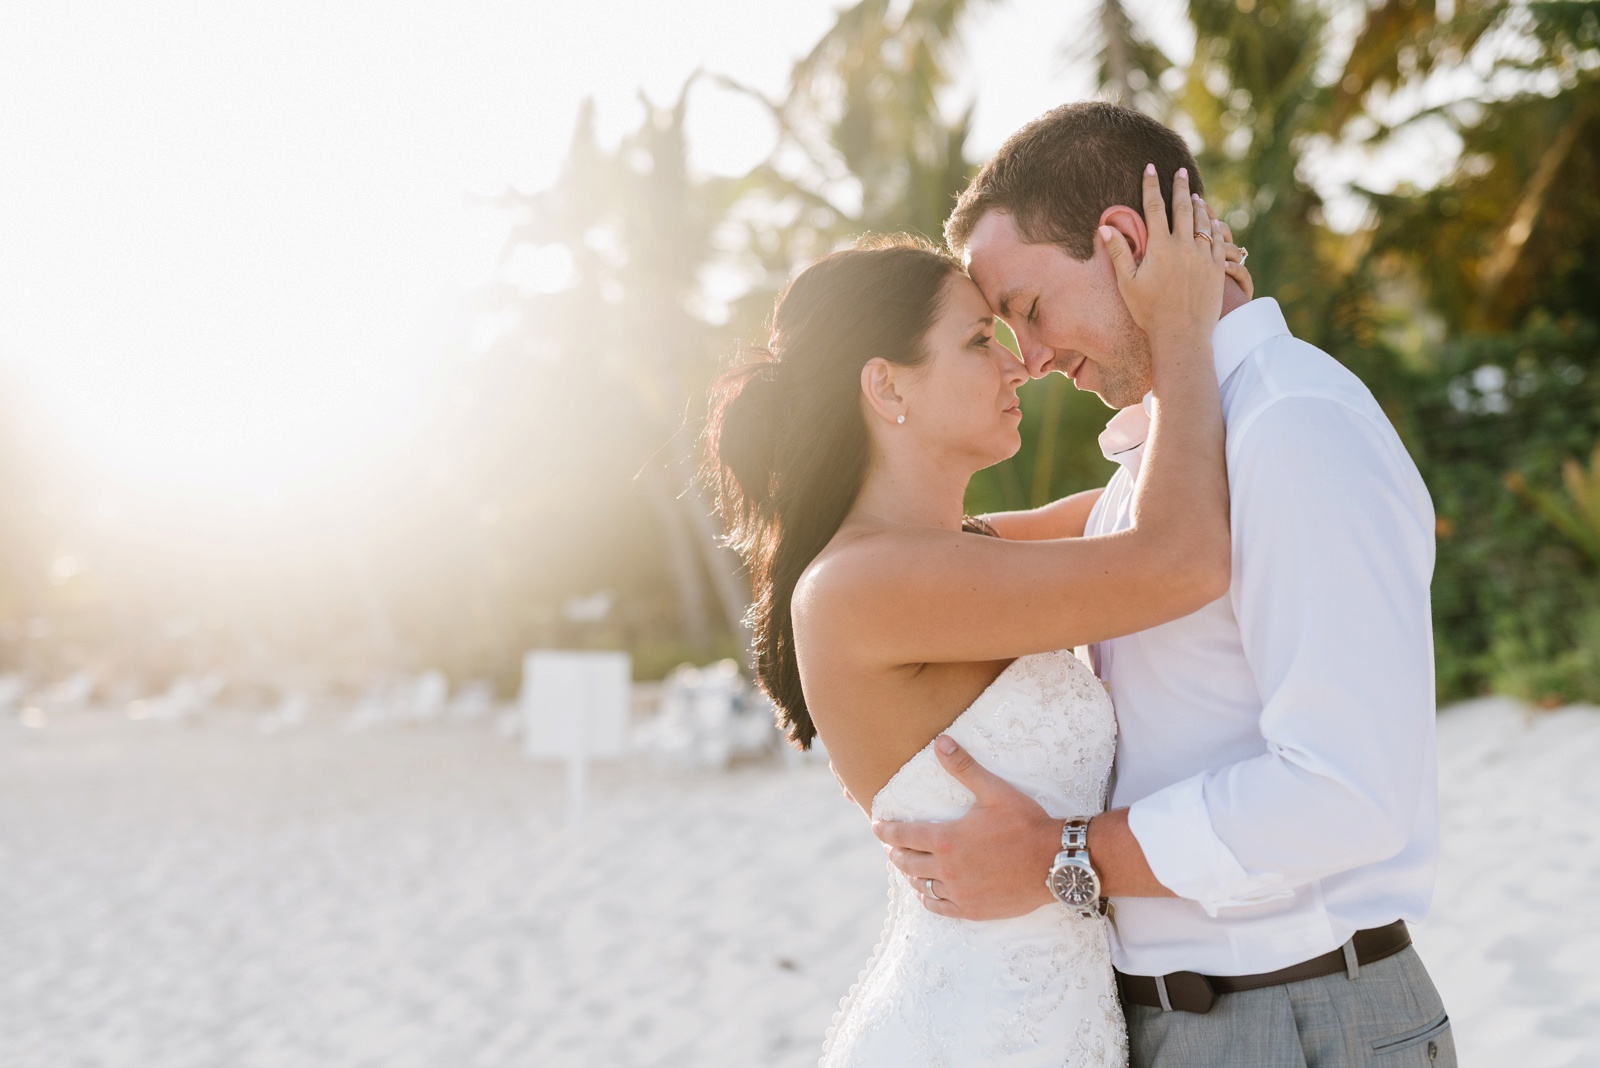 Romantic seaside Caribbean wedding in Jost van Dyke, British Virgin Islands by Boston & Destination Photographer Annmarie Swift